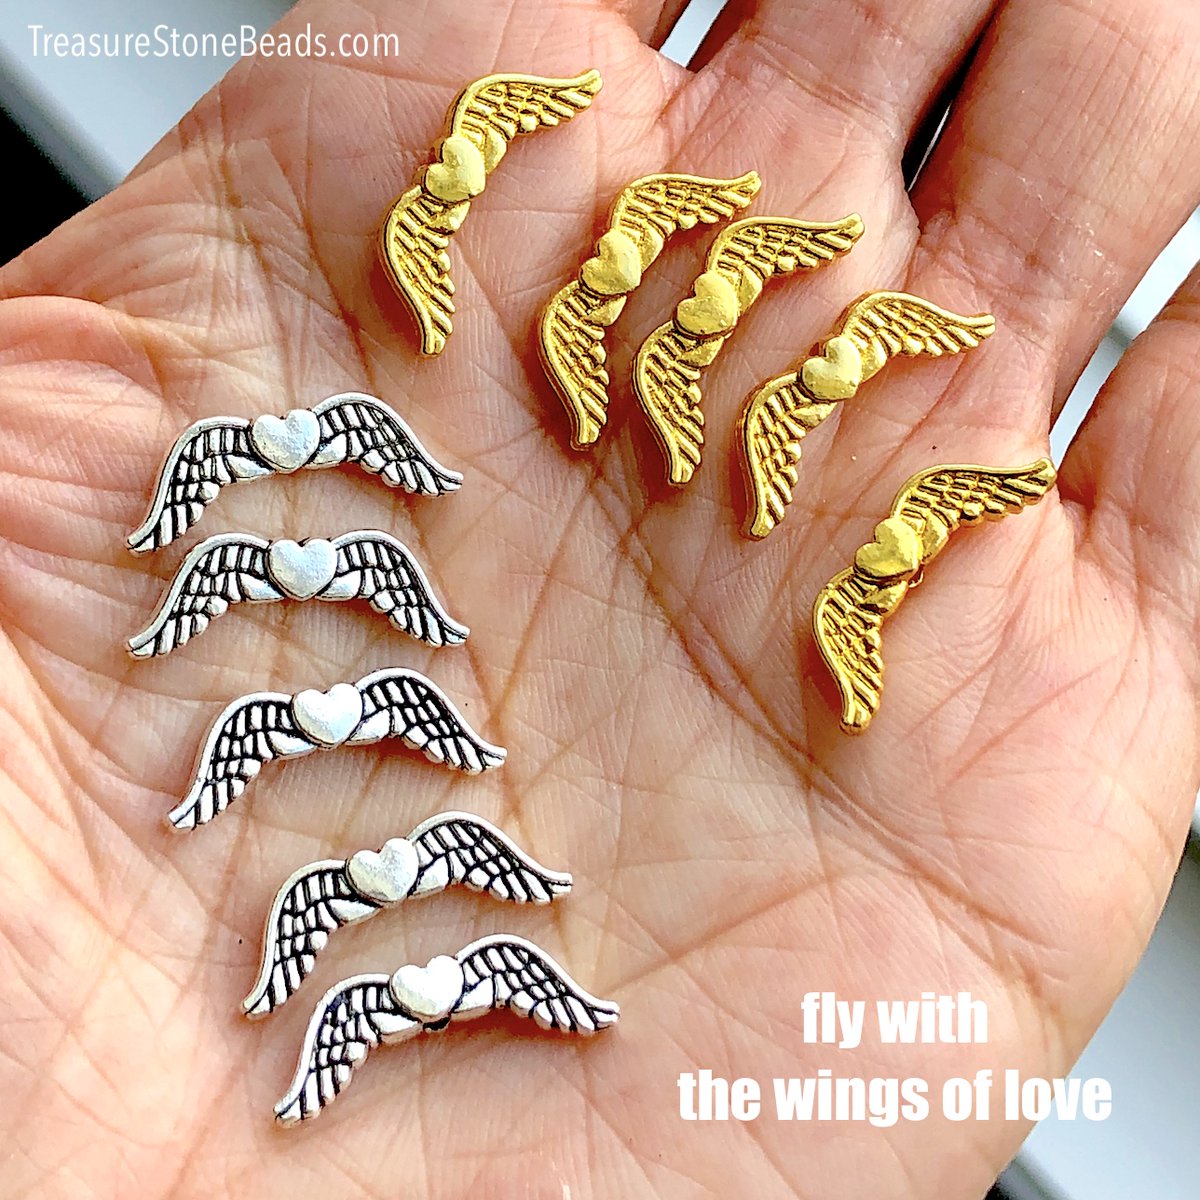 Fly with the wings of love ❤️ 

Gems & Beads Edmonton
Thurs - Sat, 11-5
Ramada Edmonton South. TC3
5359 Calgary Trail

#findings #beads #wings #wingsoflove #love #beadingsupplies  #pendant #Edmonton #healingcrystal  #healingstones #jewellerymaking #DIY 

TreasureStoneBeads.com